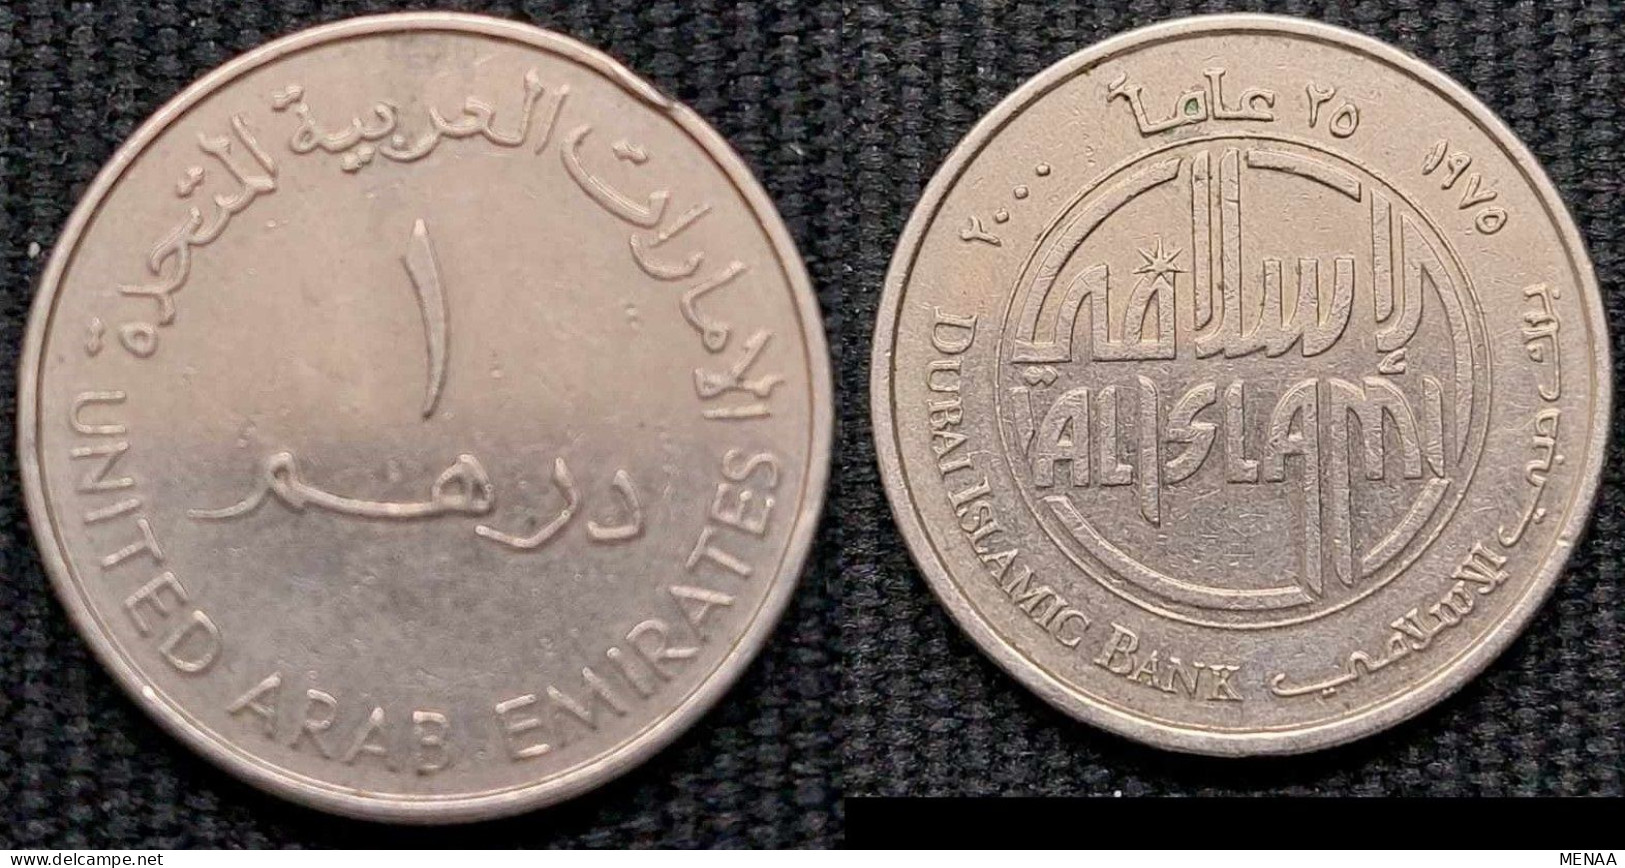 United Arab Emirates -1 Dirham -2000-The Silver Jubilee Of Dubai Islamic Bank - KM 43 - United Arab Emirates